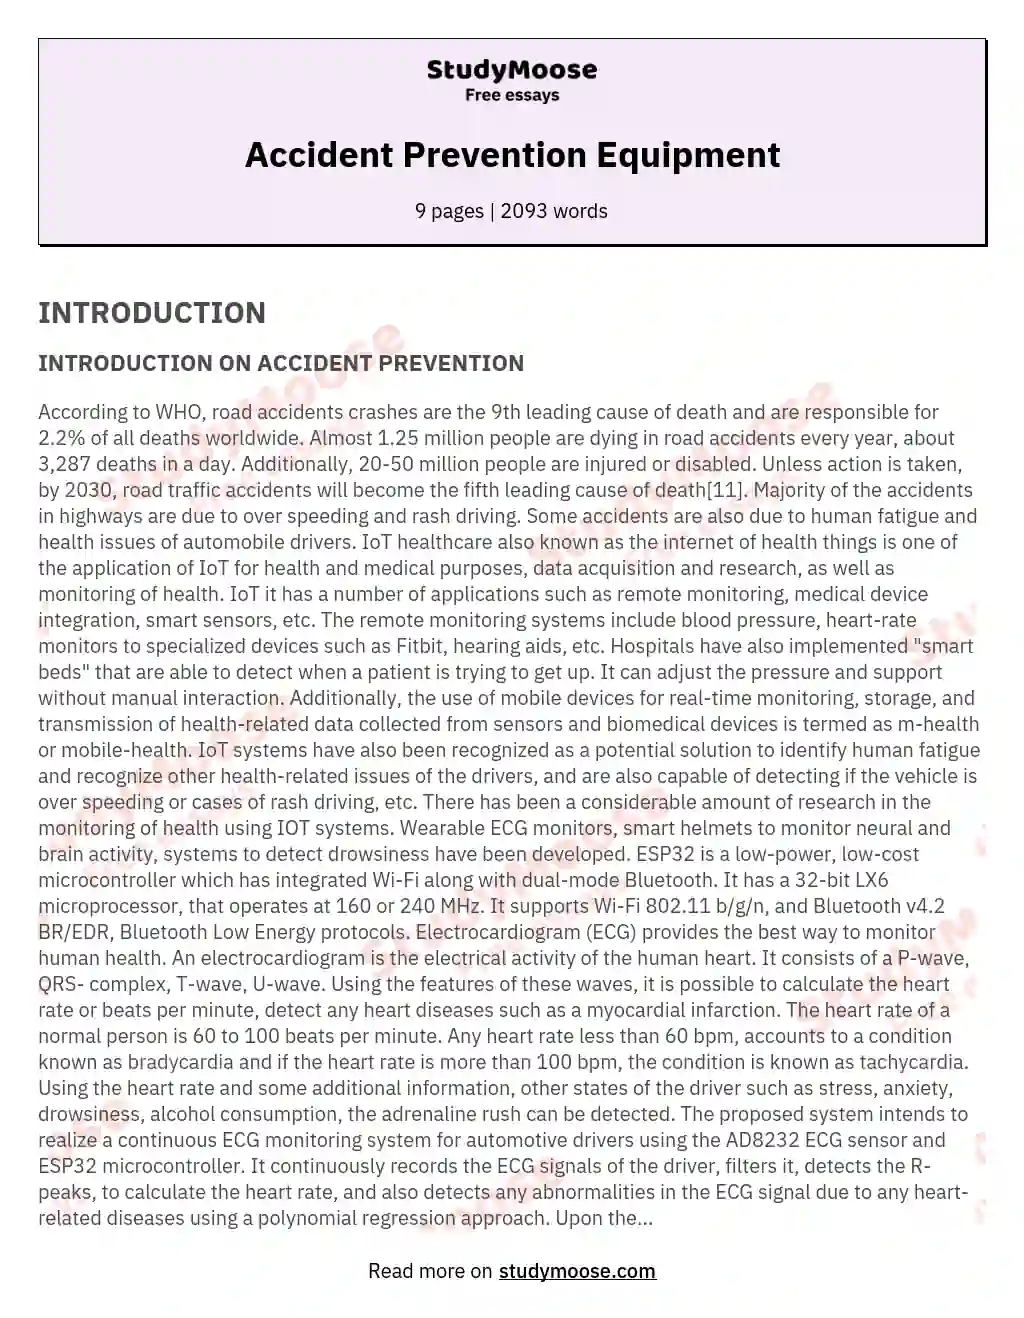 Accident Prevention Equipment essay